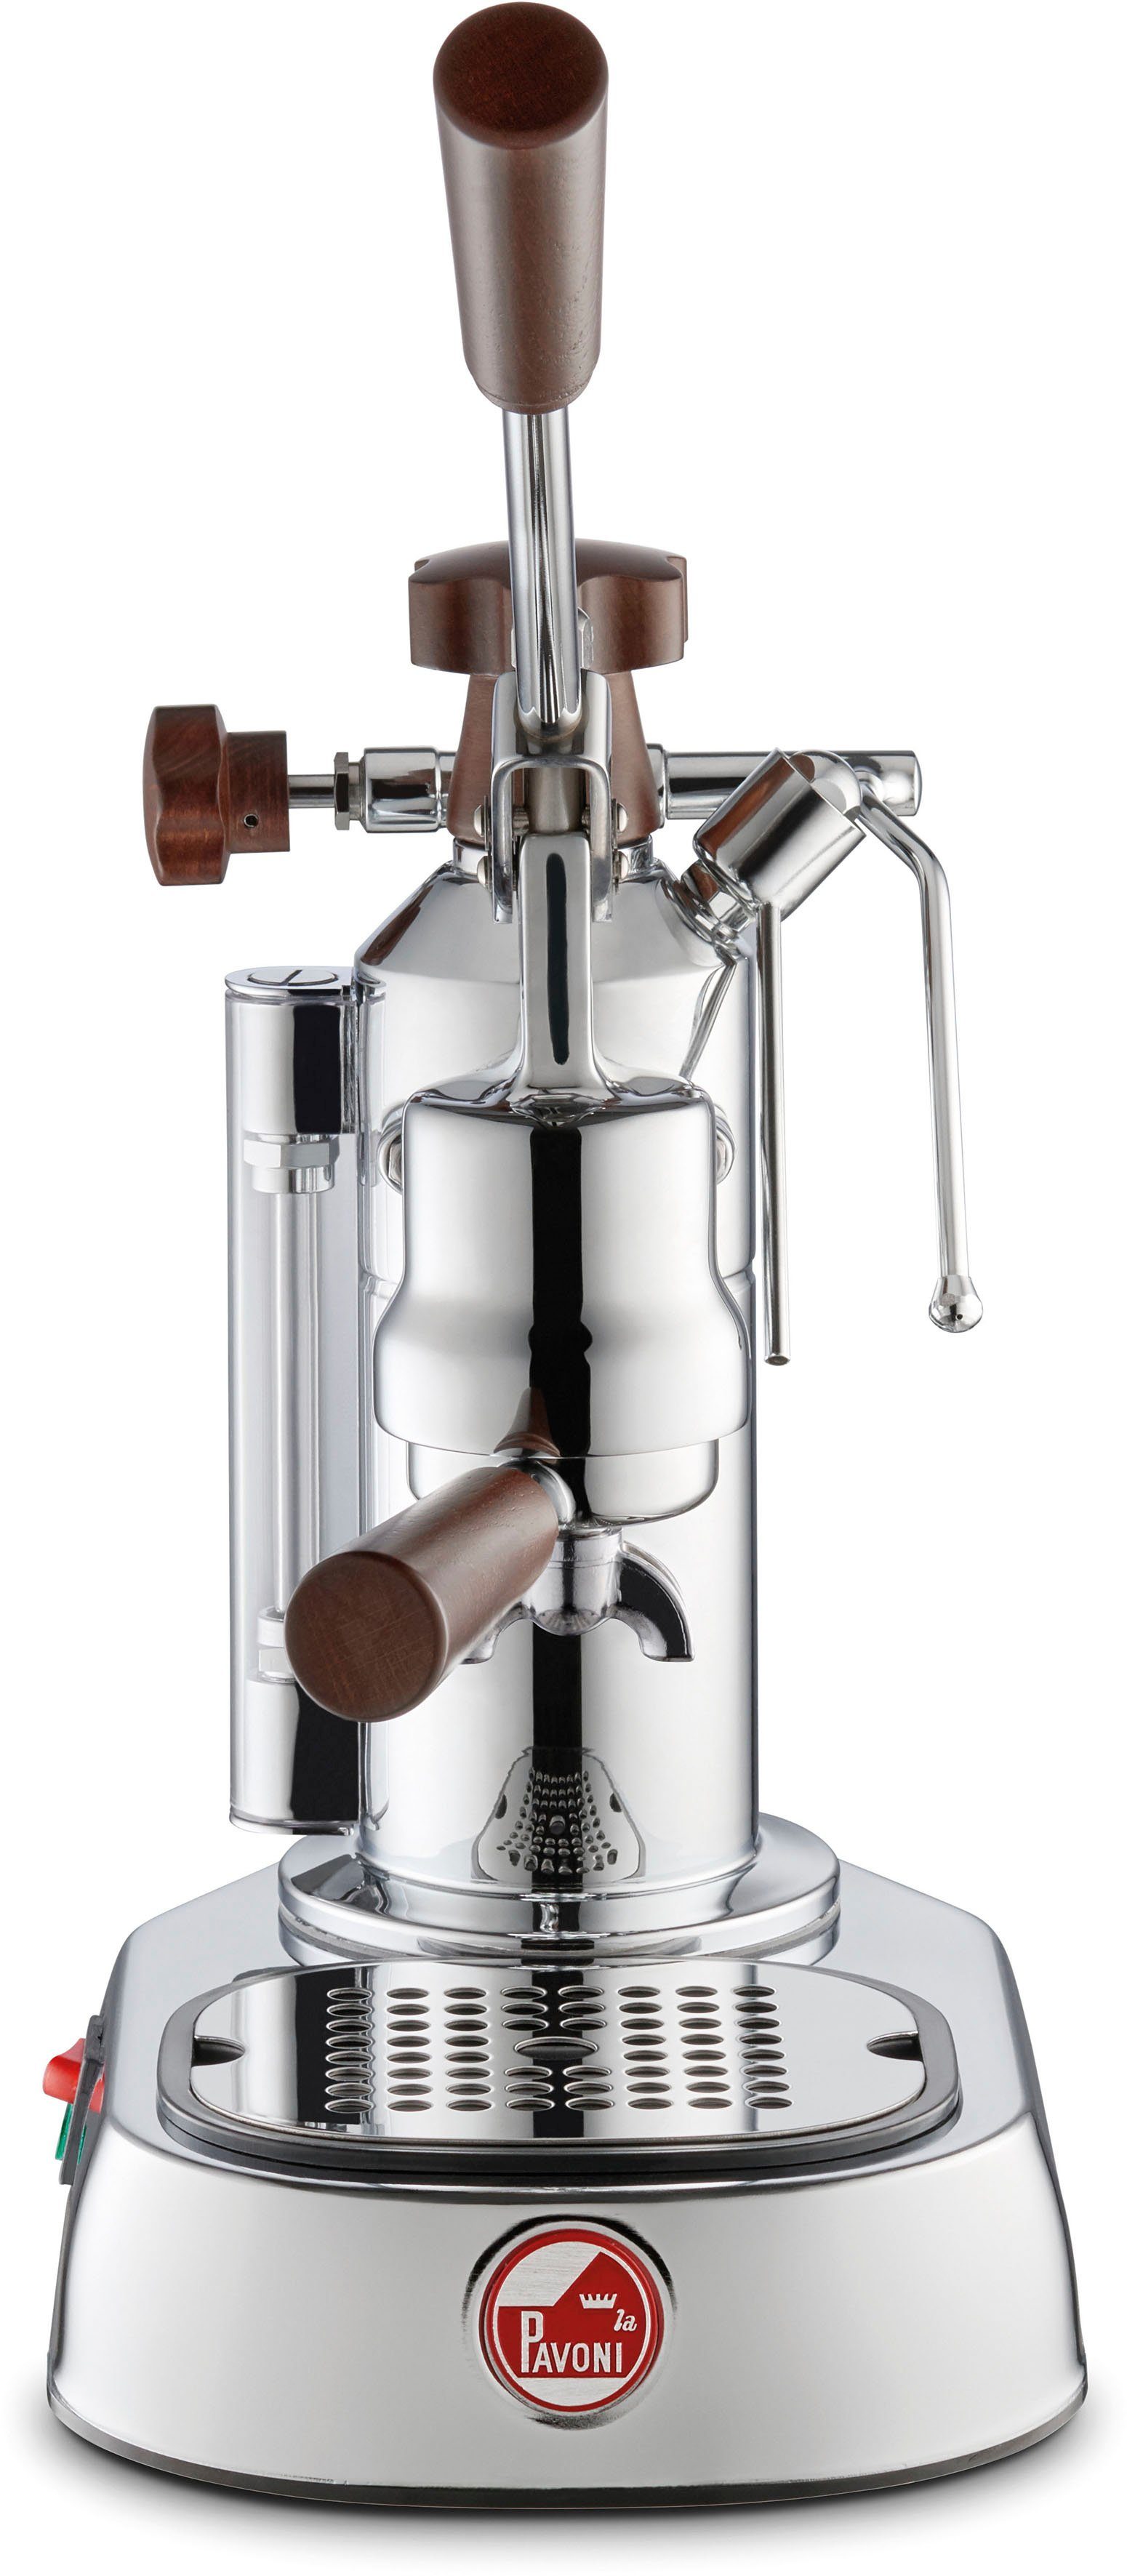 La Espressomaschine Pavoni LPLELH01EU